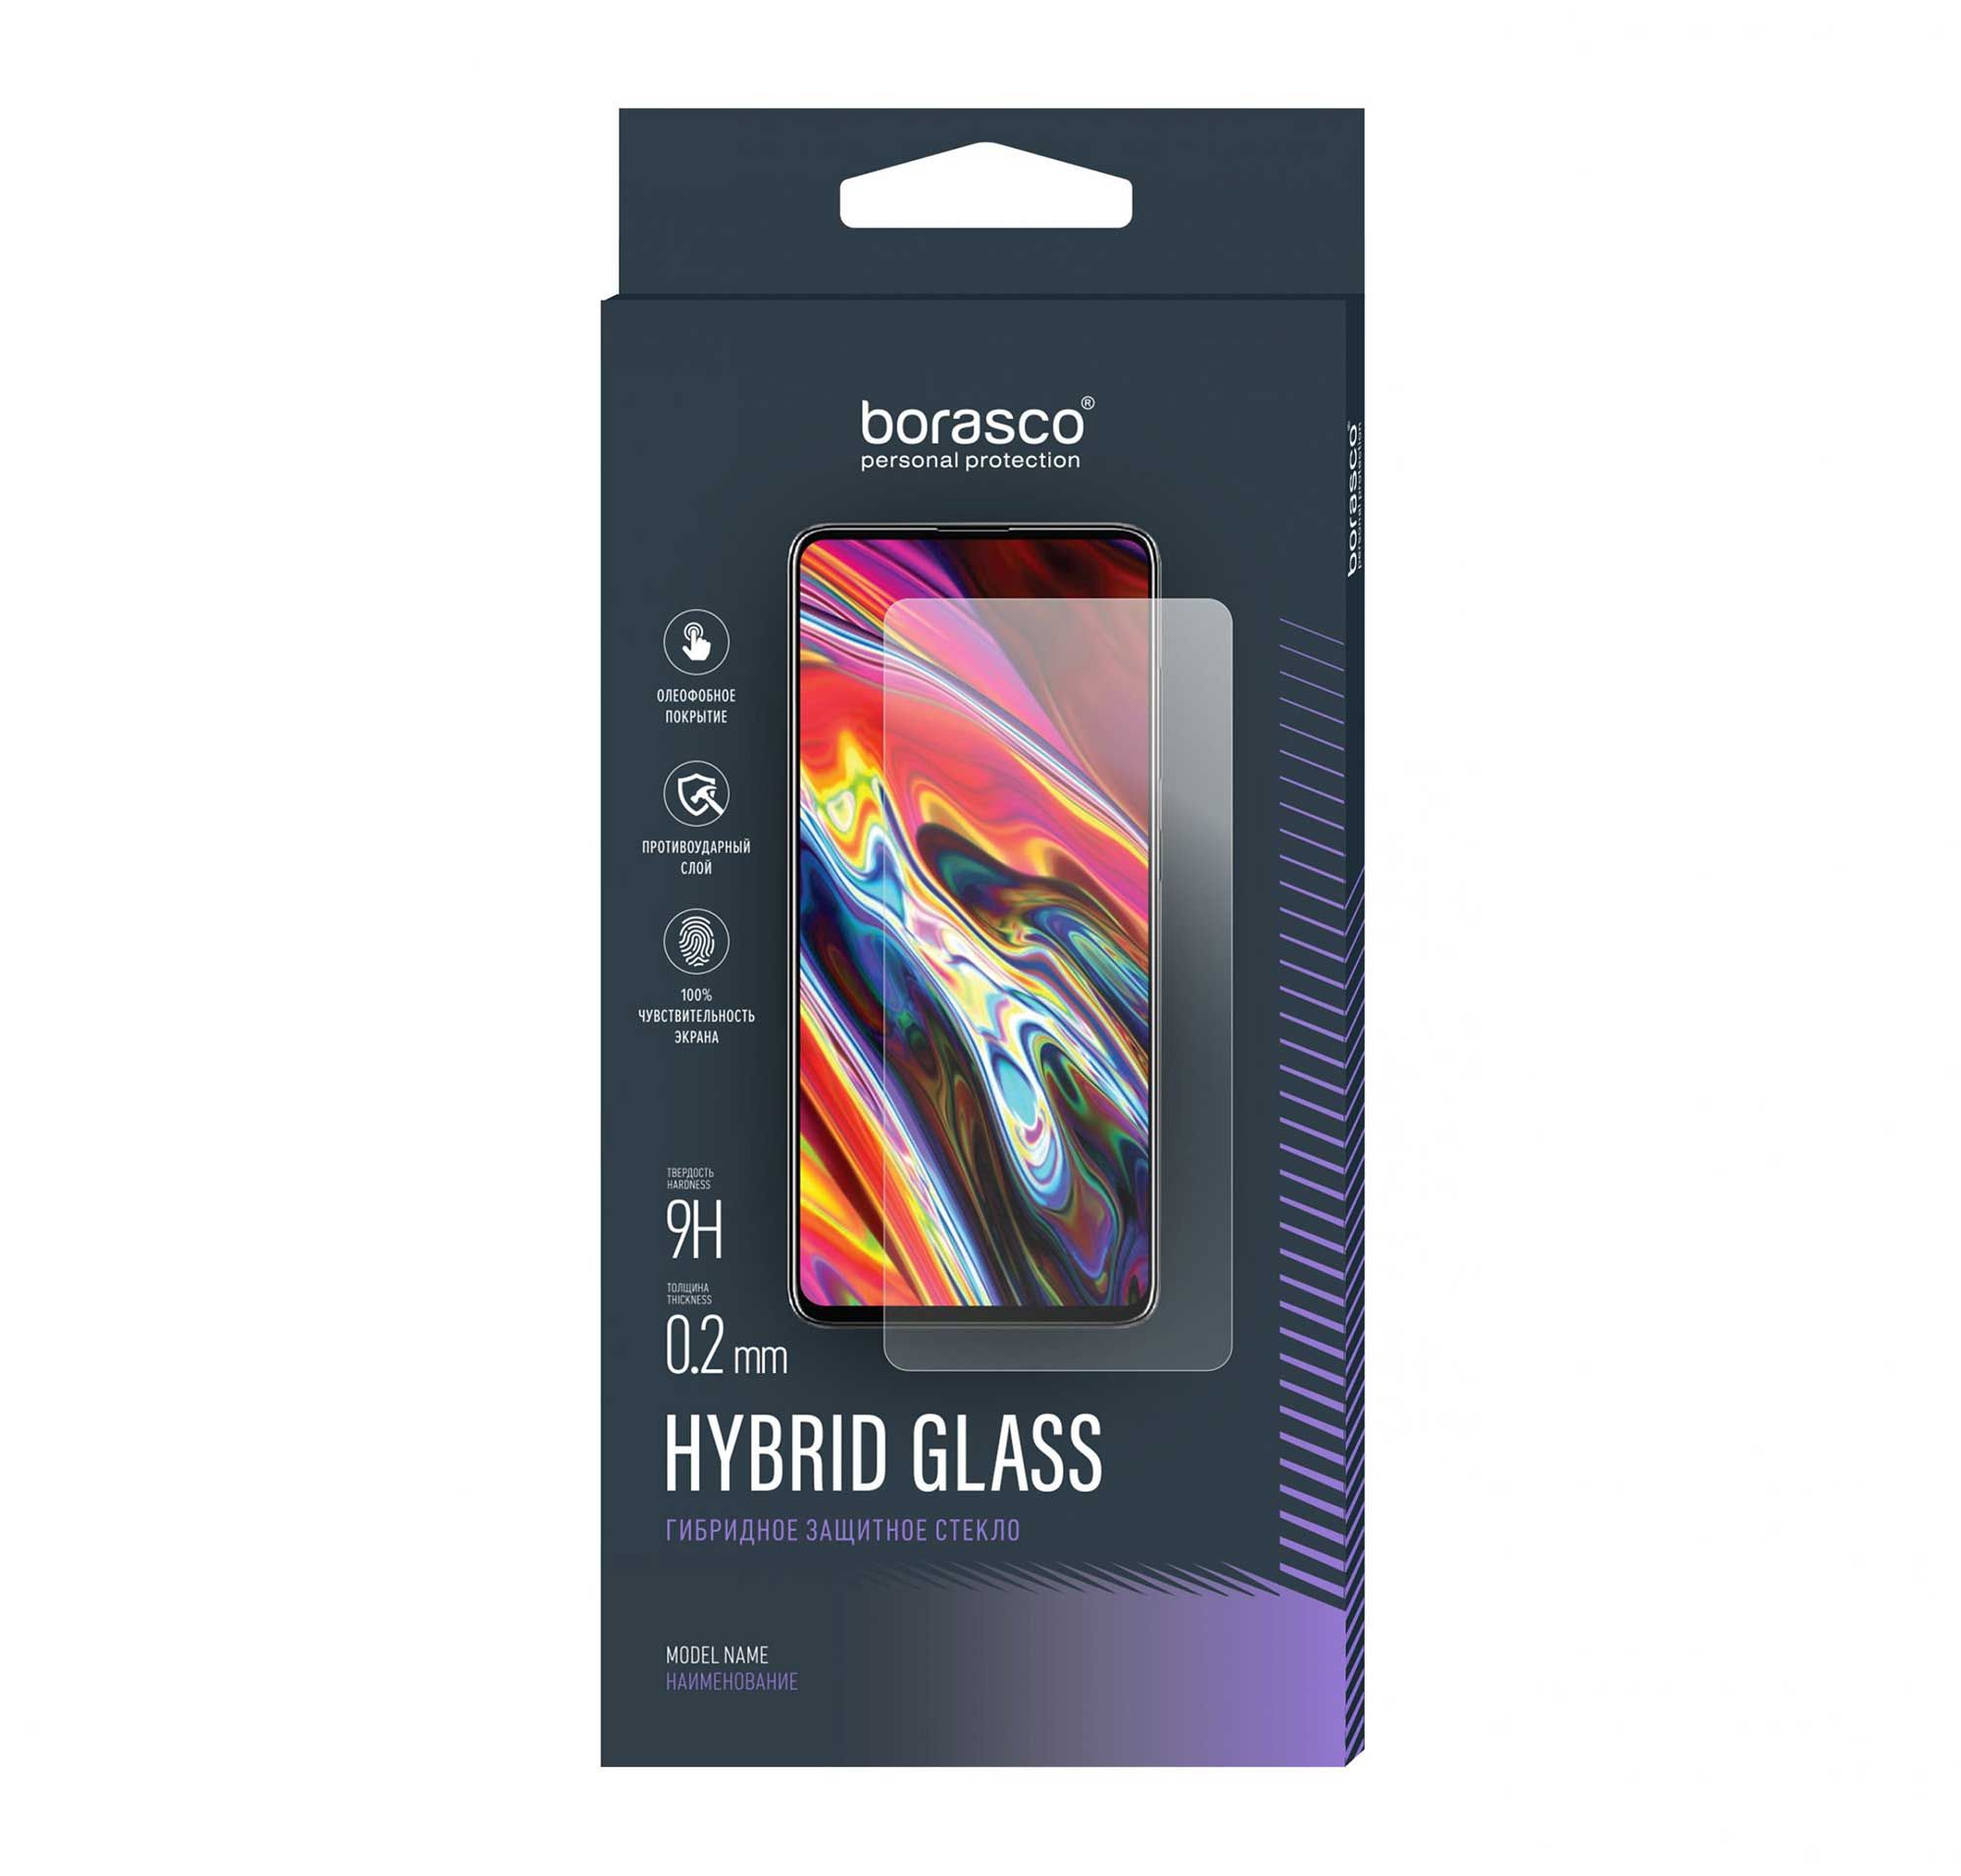 Защитное стекло Hybrid Glass для Samsung Galaxy M33 стекло с полным покрытием для samsung galaxy m33 закаленное стекло для samsung galaxy m33 m22 защитная пленка для экрана samsung m33